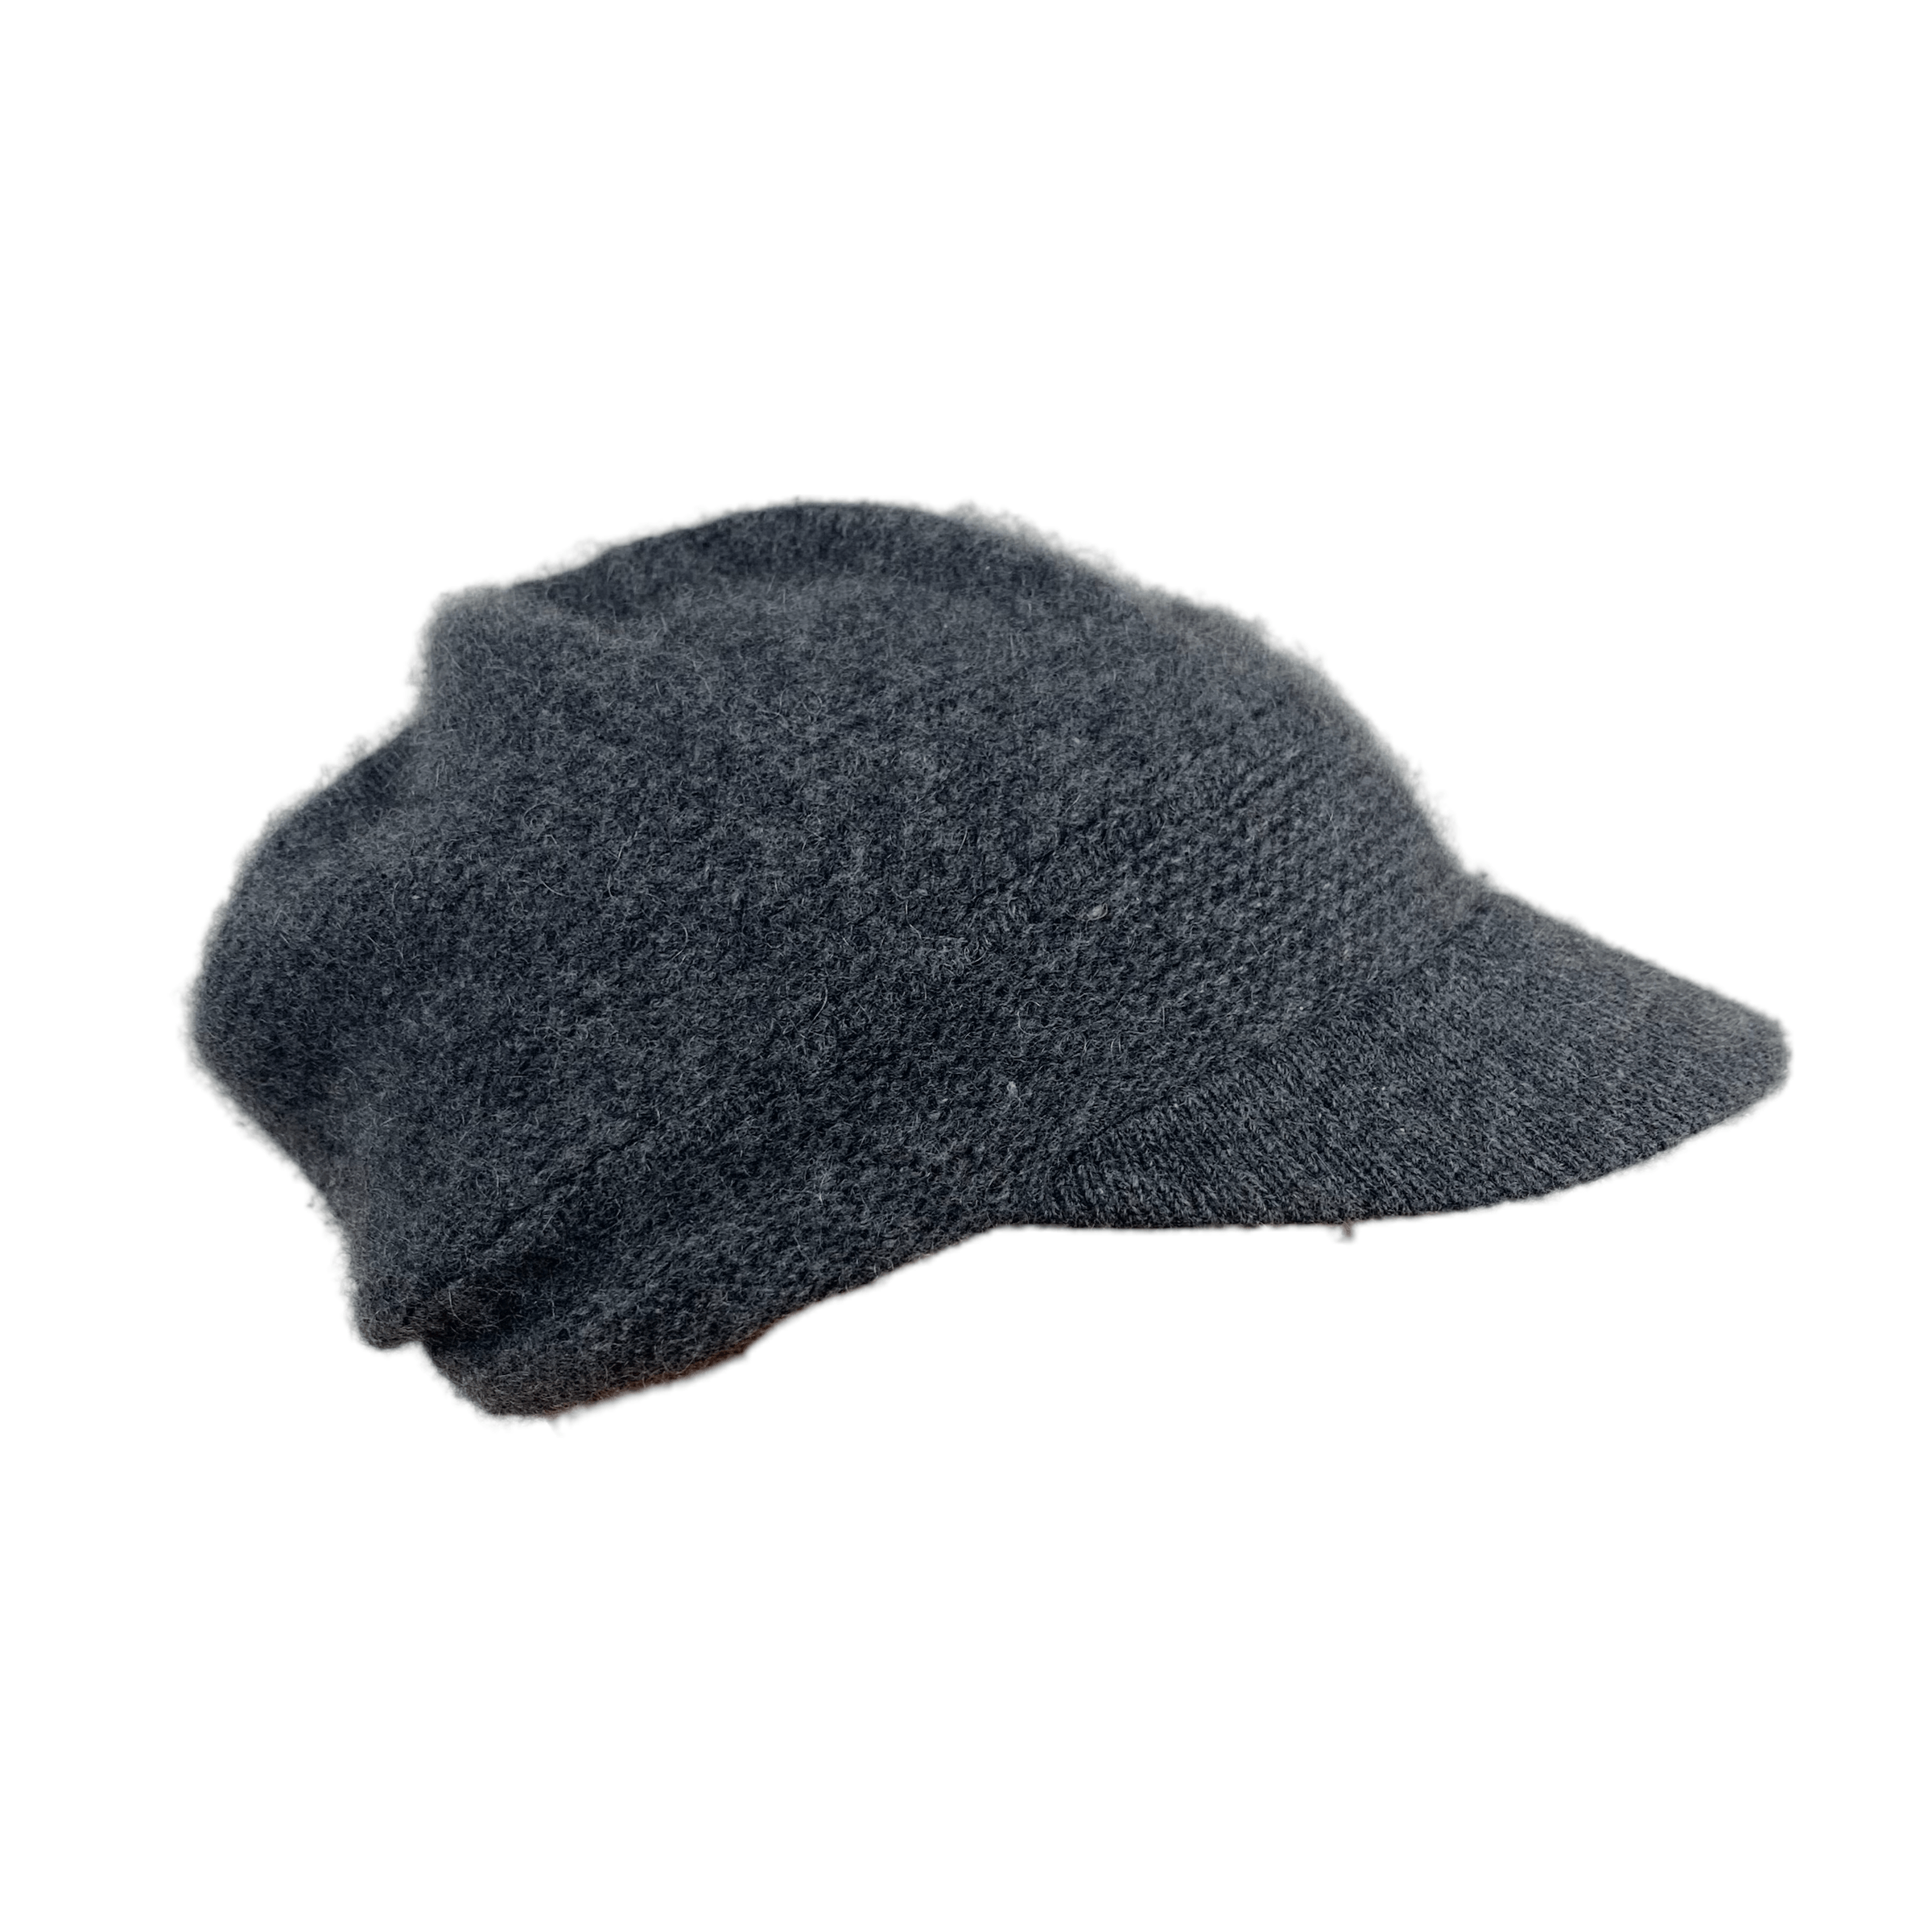 Lanvin Hats #140-F - 3